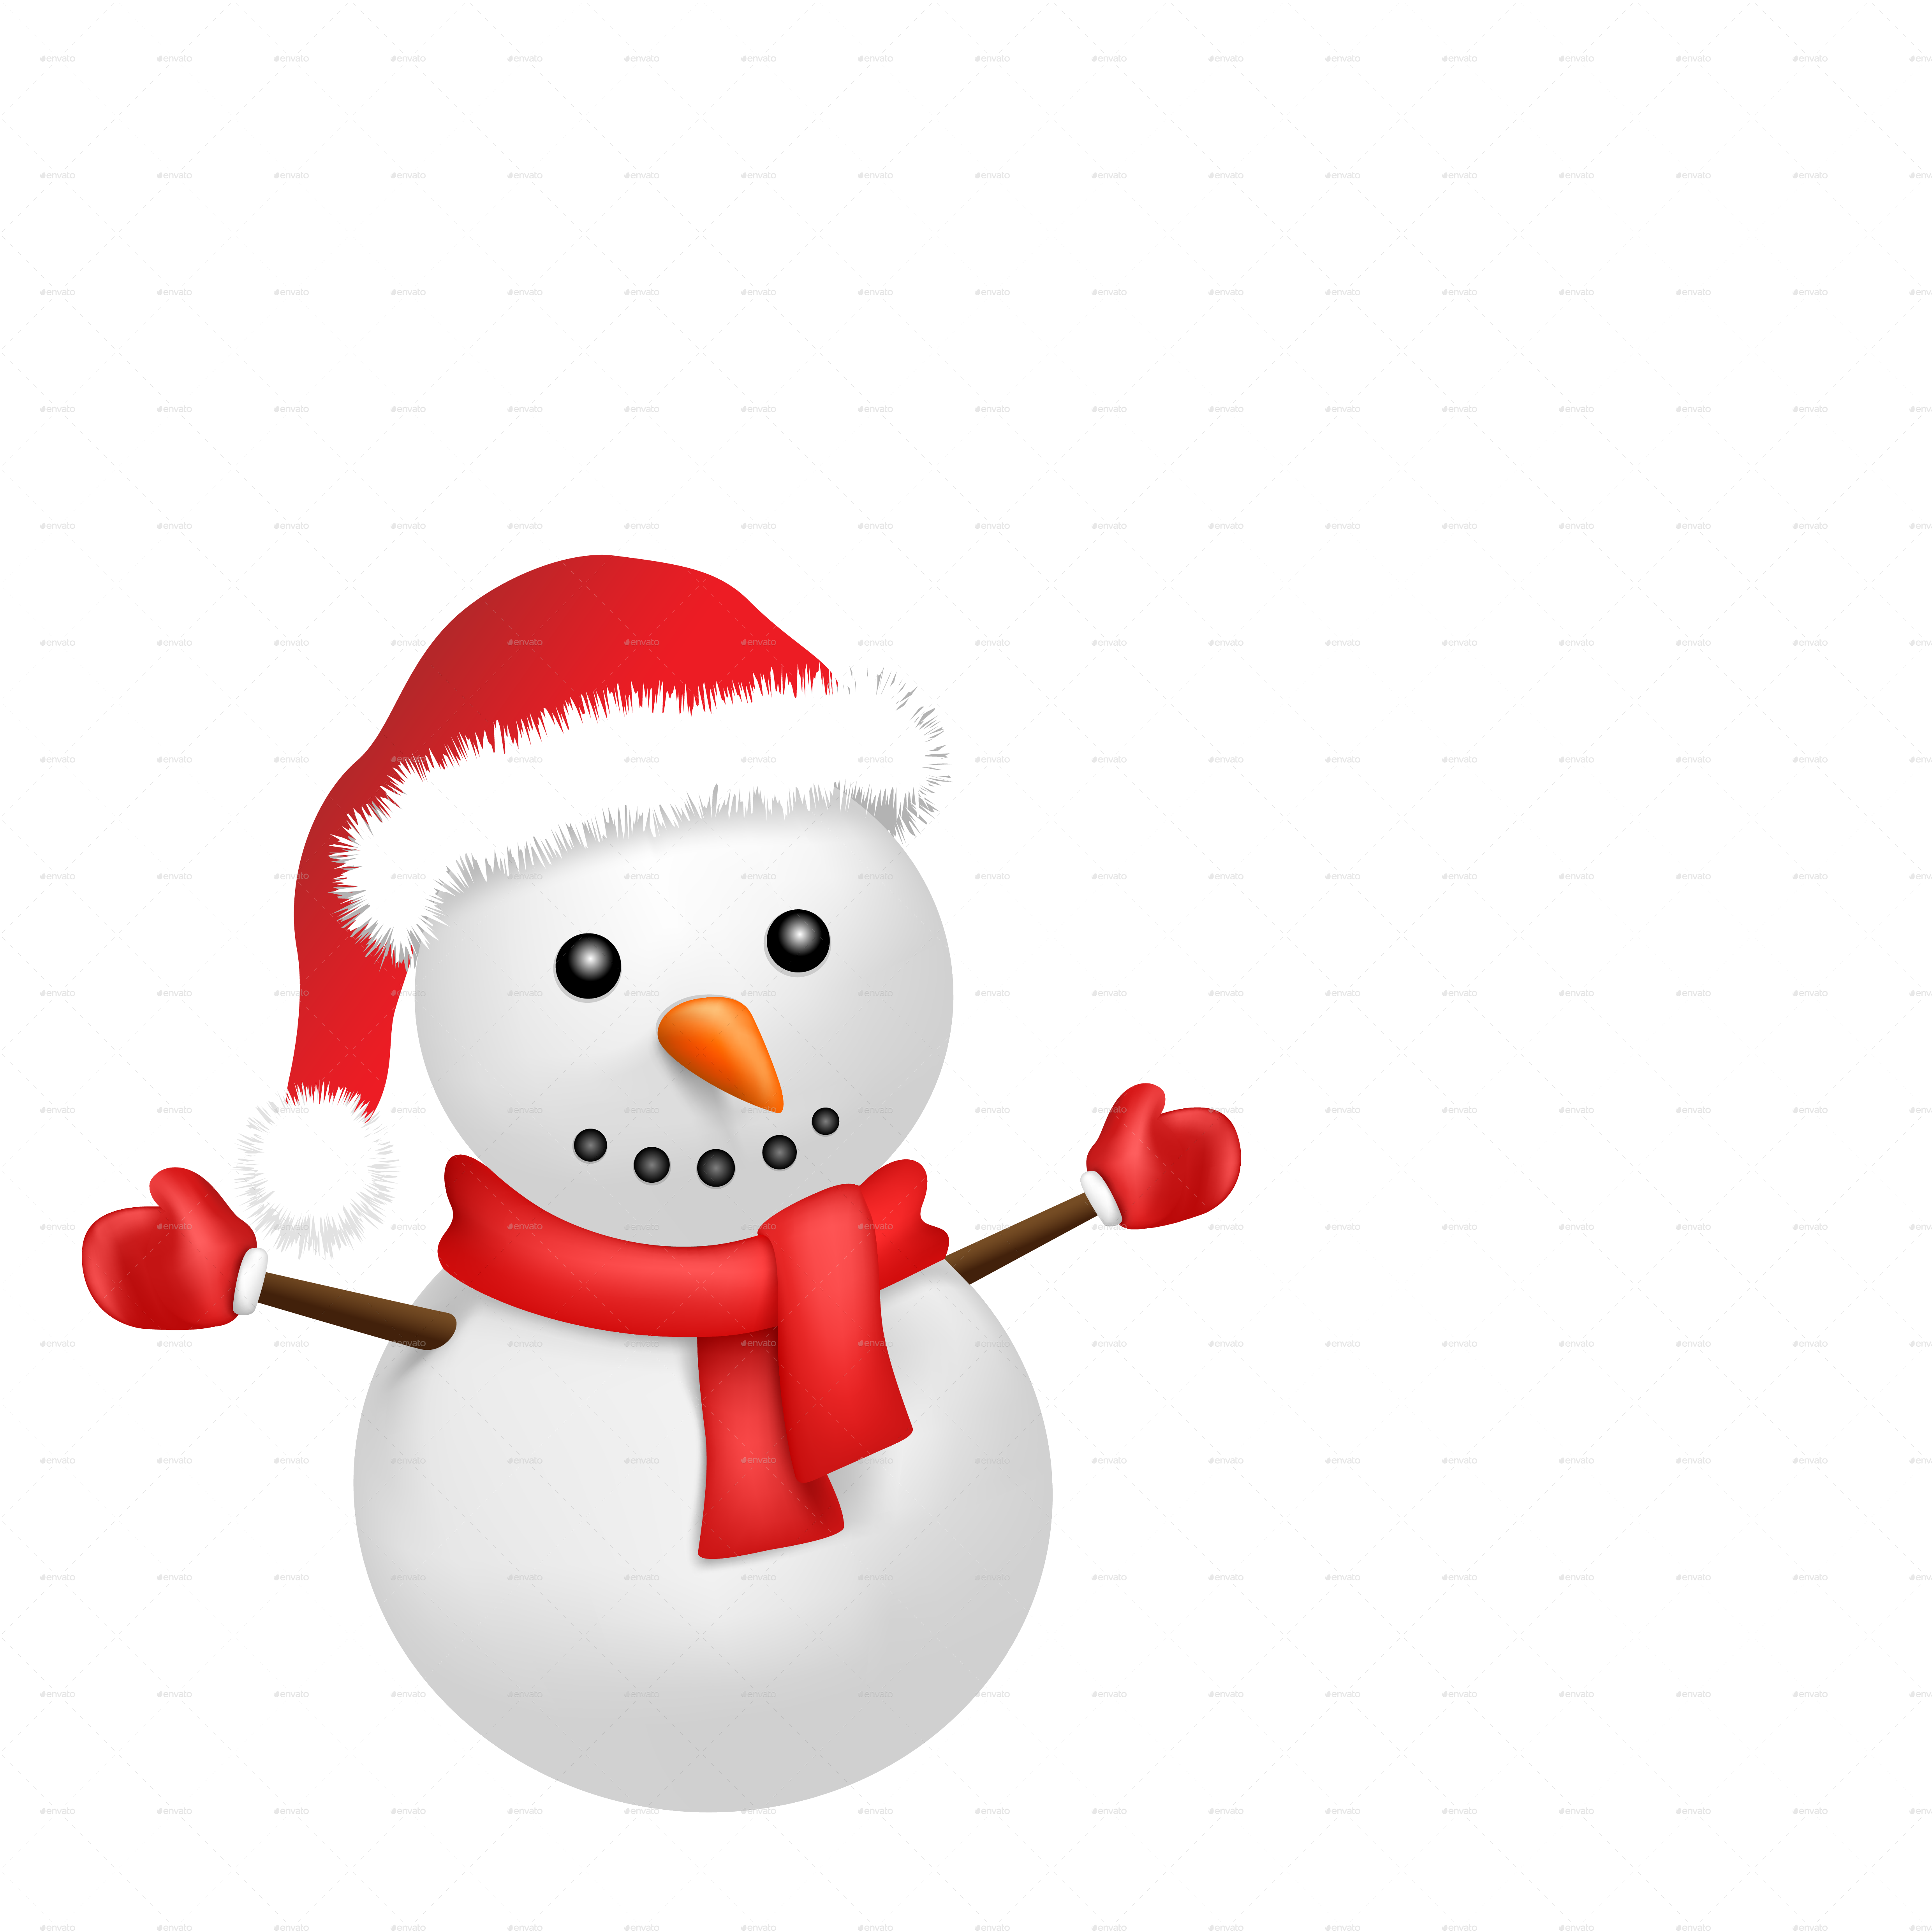 clipart snowman vector